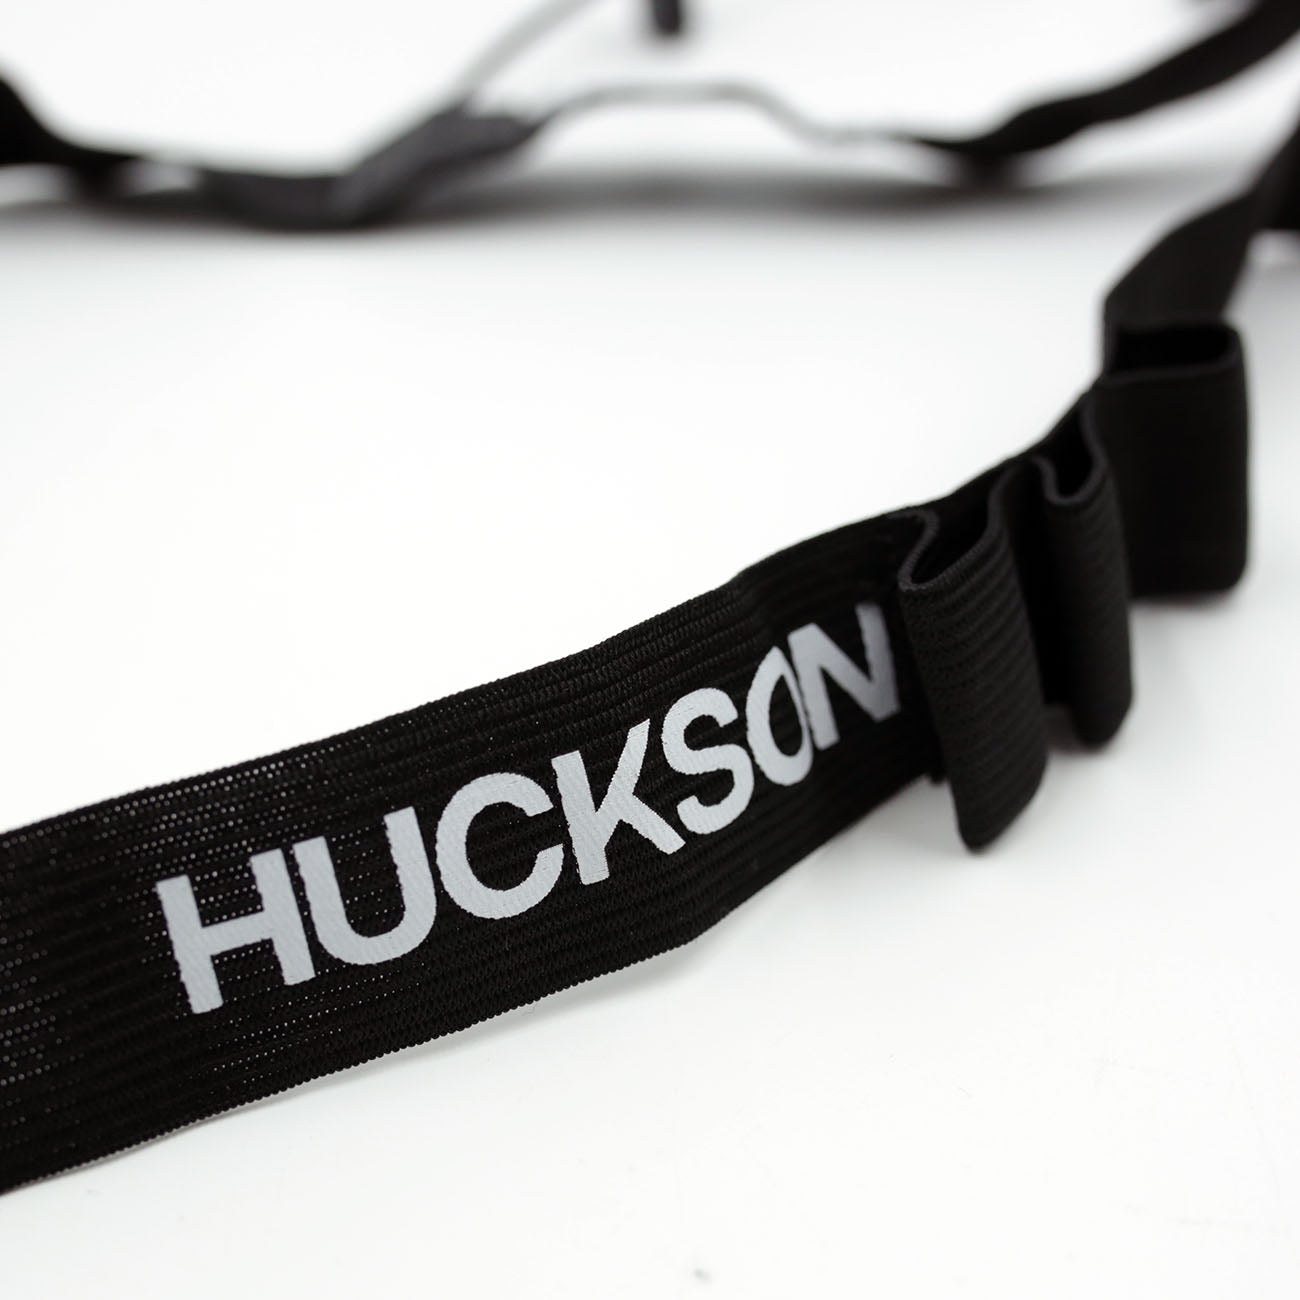 Huckson Triathlon Race Belt